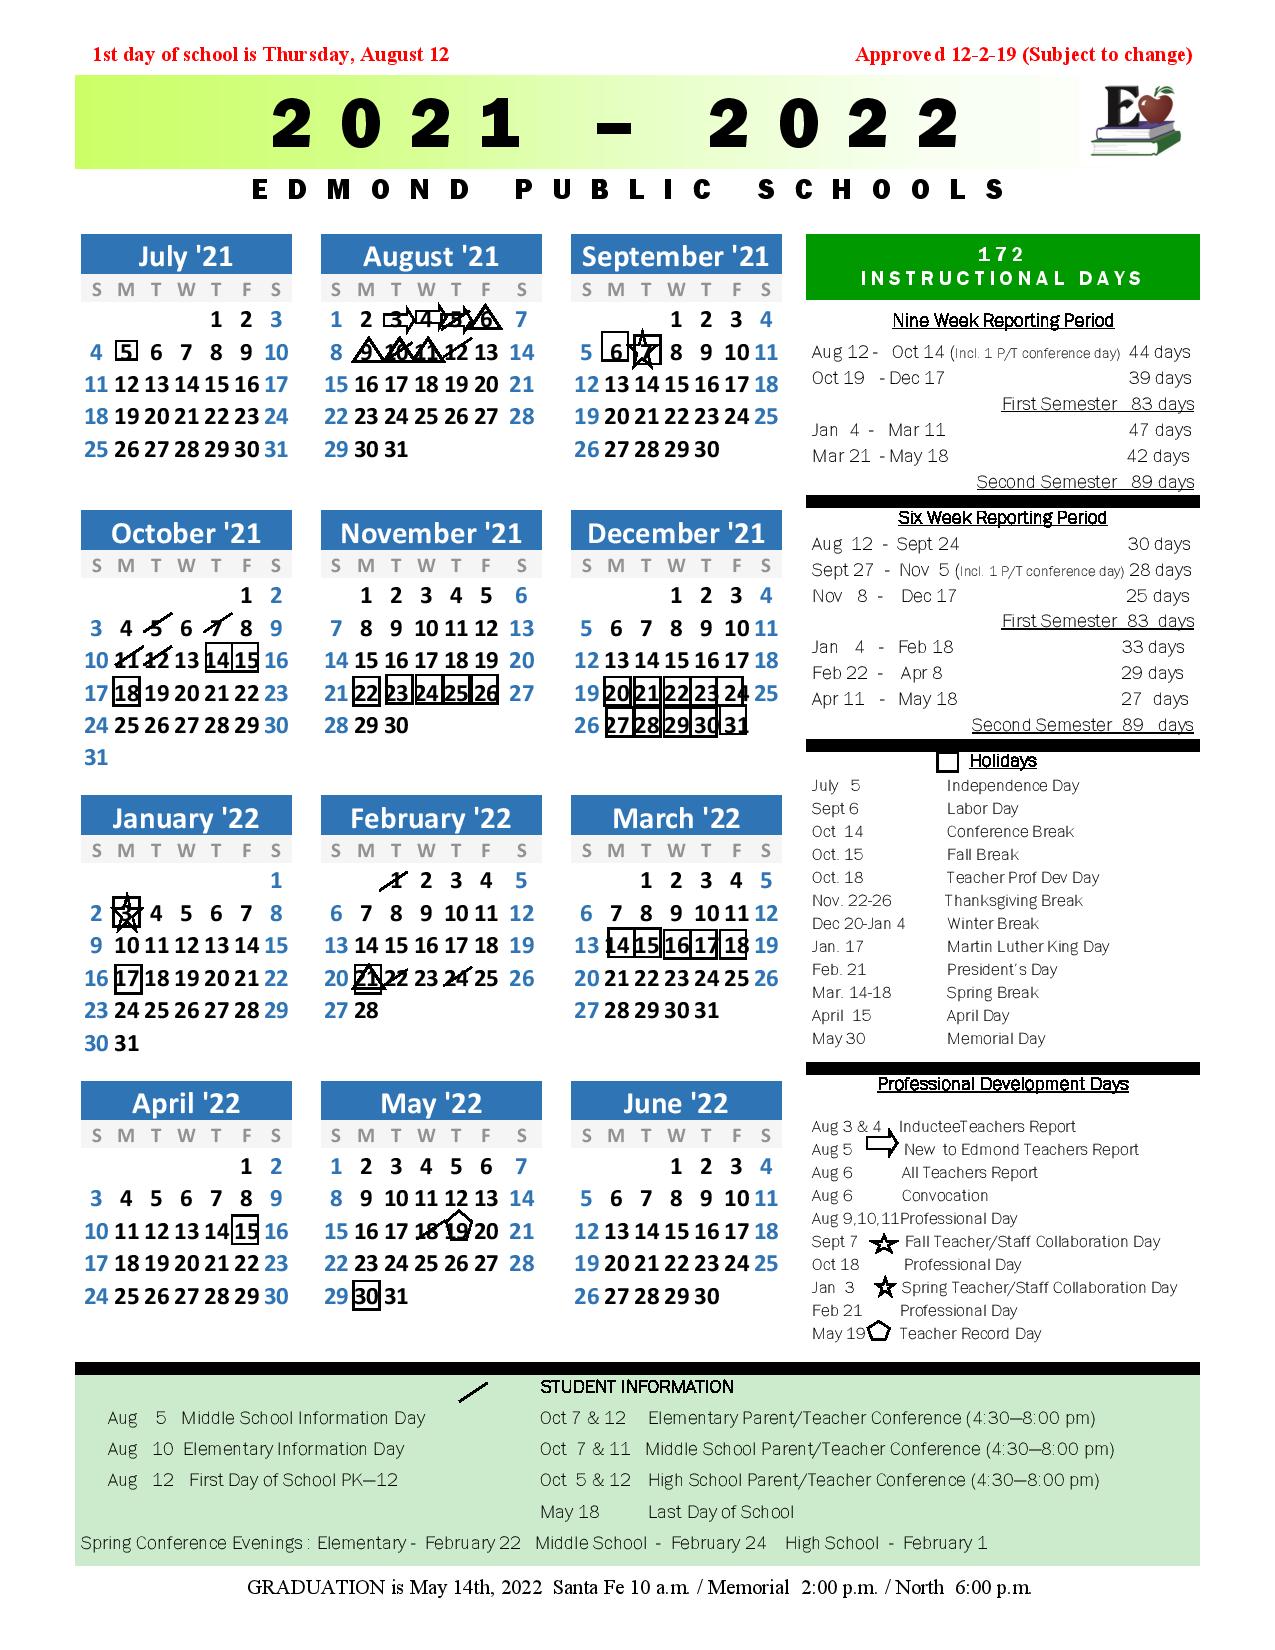 Ou Academic Calendar Spring 2022 Edmond Public Schools Calendar 2021-2022 In Pdf